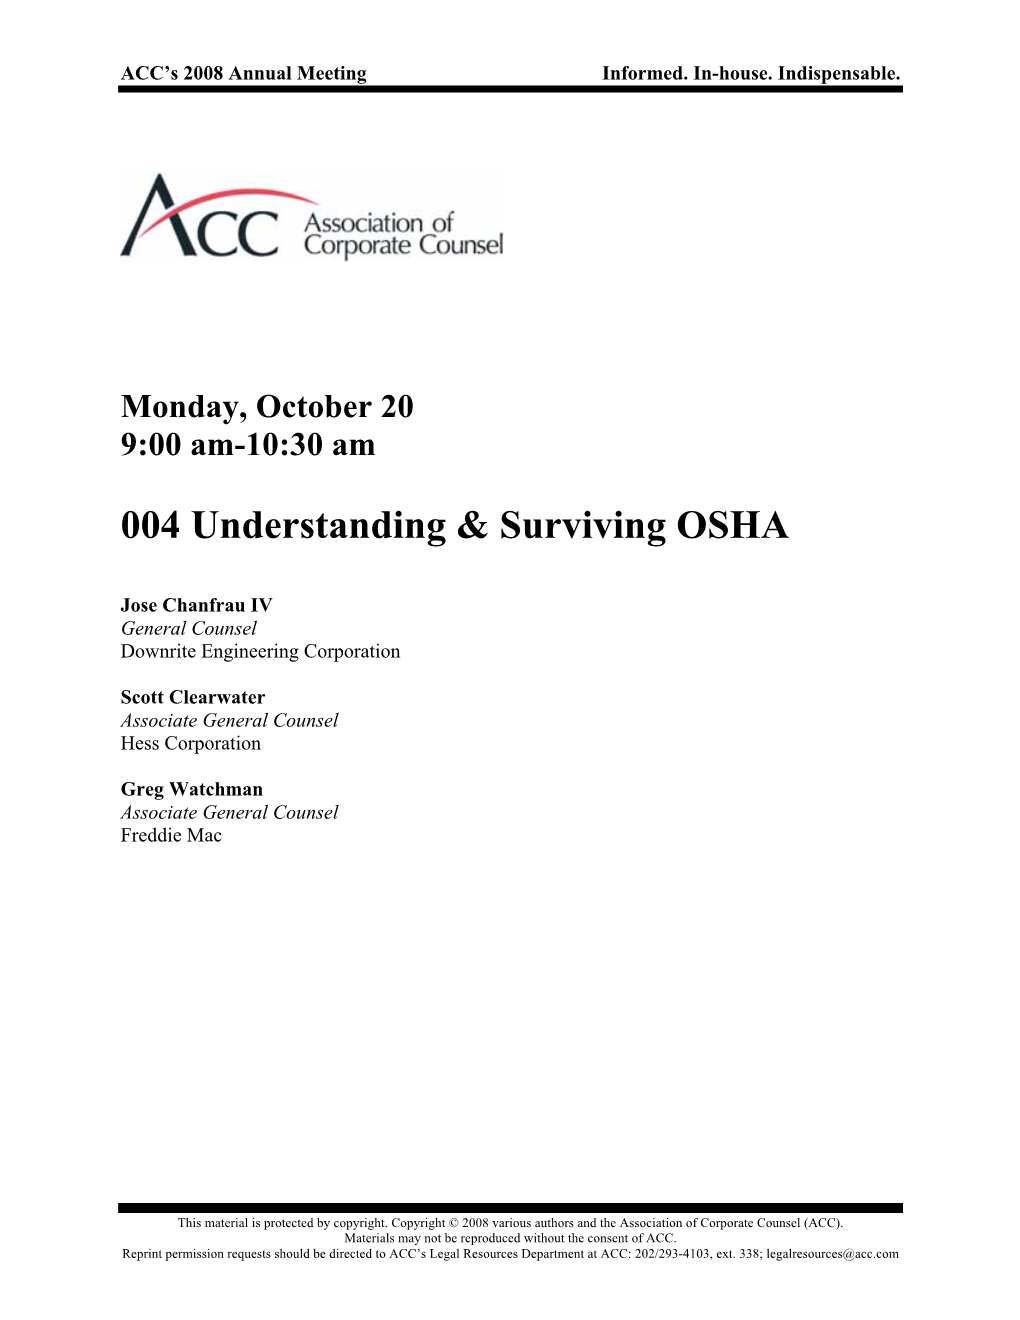 004 Understanding & Surviving OSHA